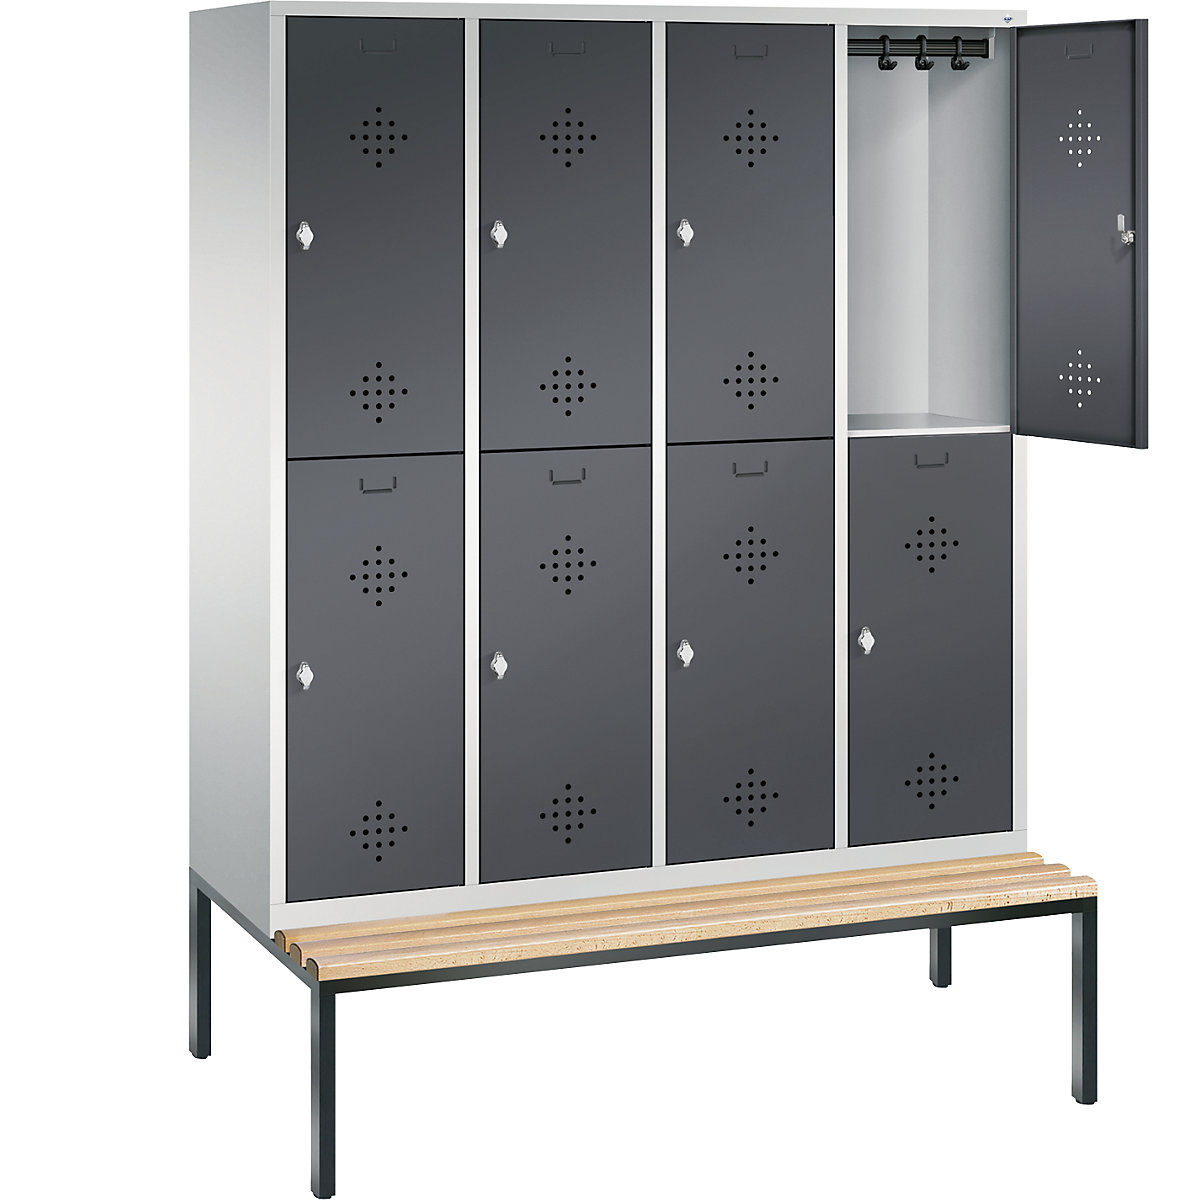 bench C+P: tier kaiserkraft – 400 4 locker double mm compartments, with width shelf cloakroom 2 CLASSIC mounted compartment each, underneath, | compartments